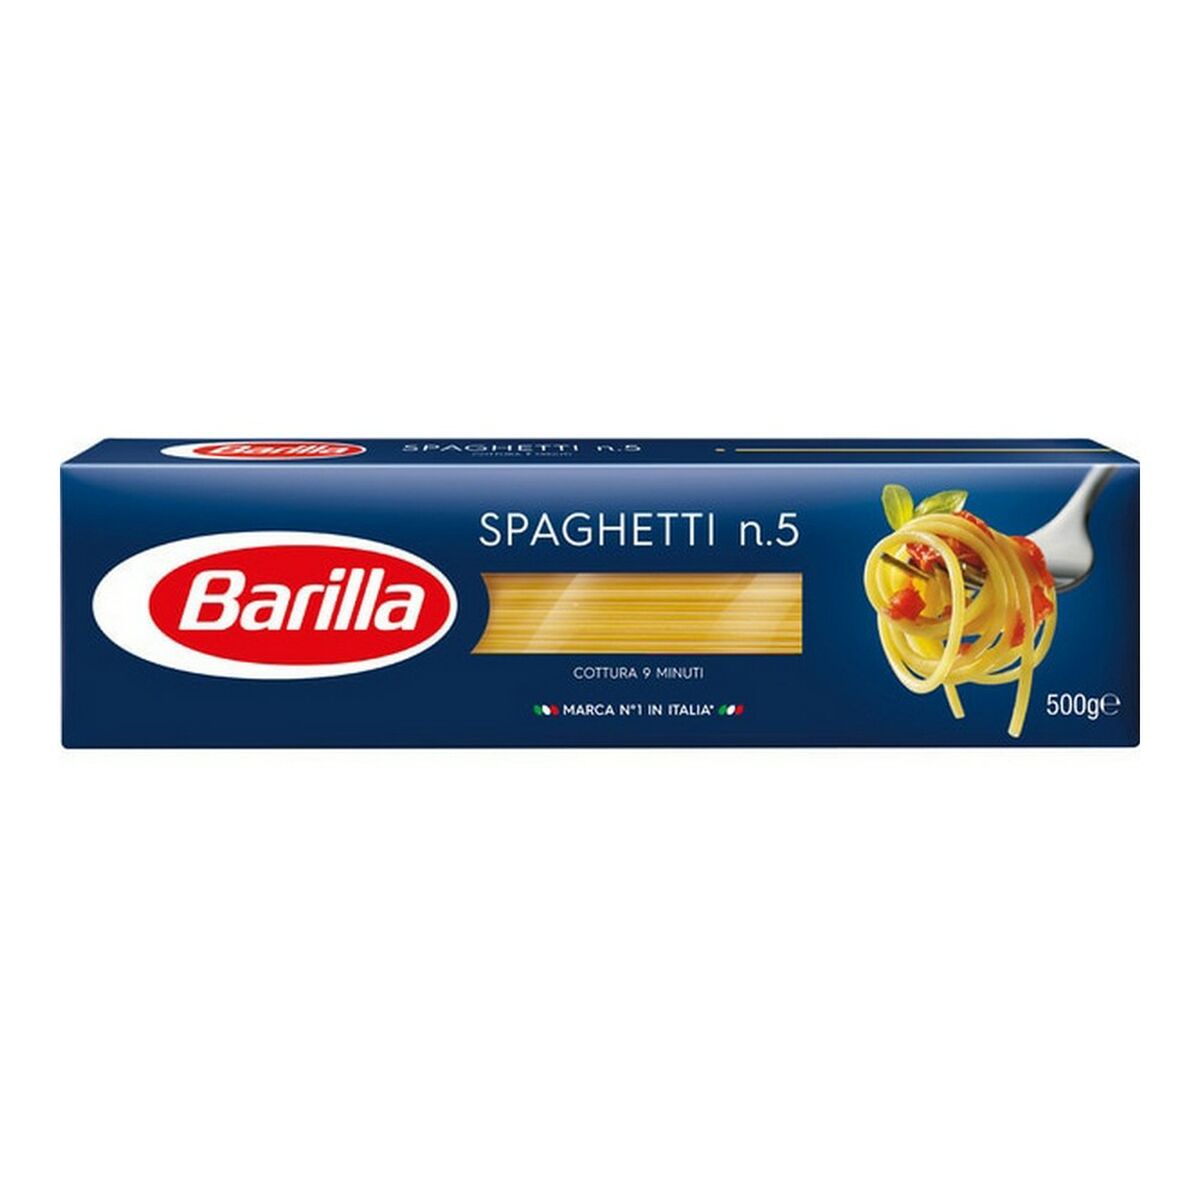 Spaghetti Barilla Nº5 (500 g)